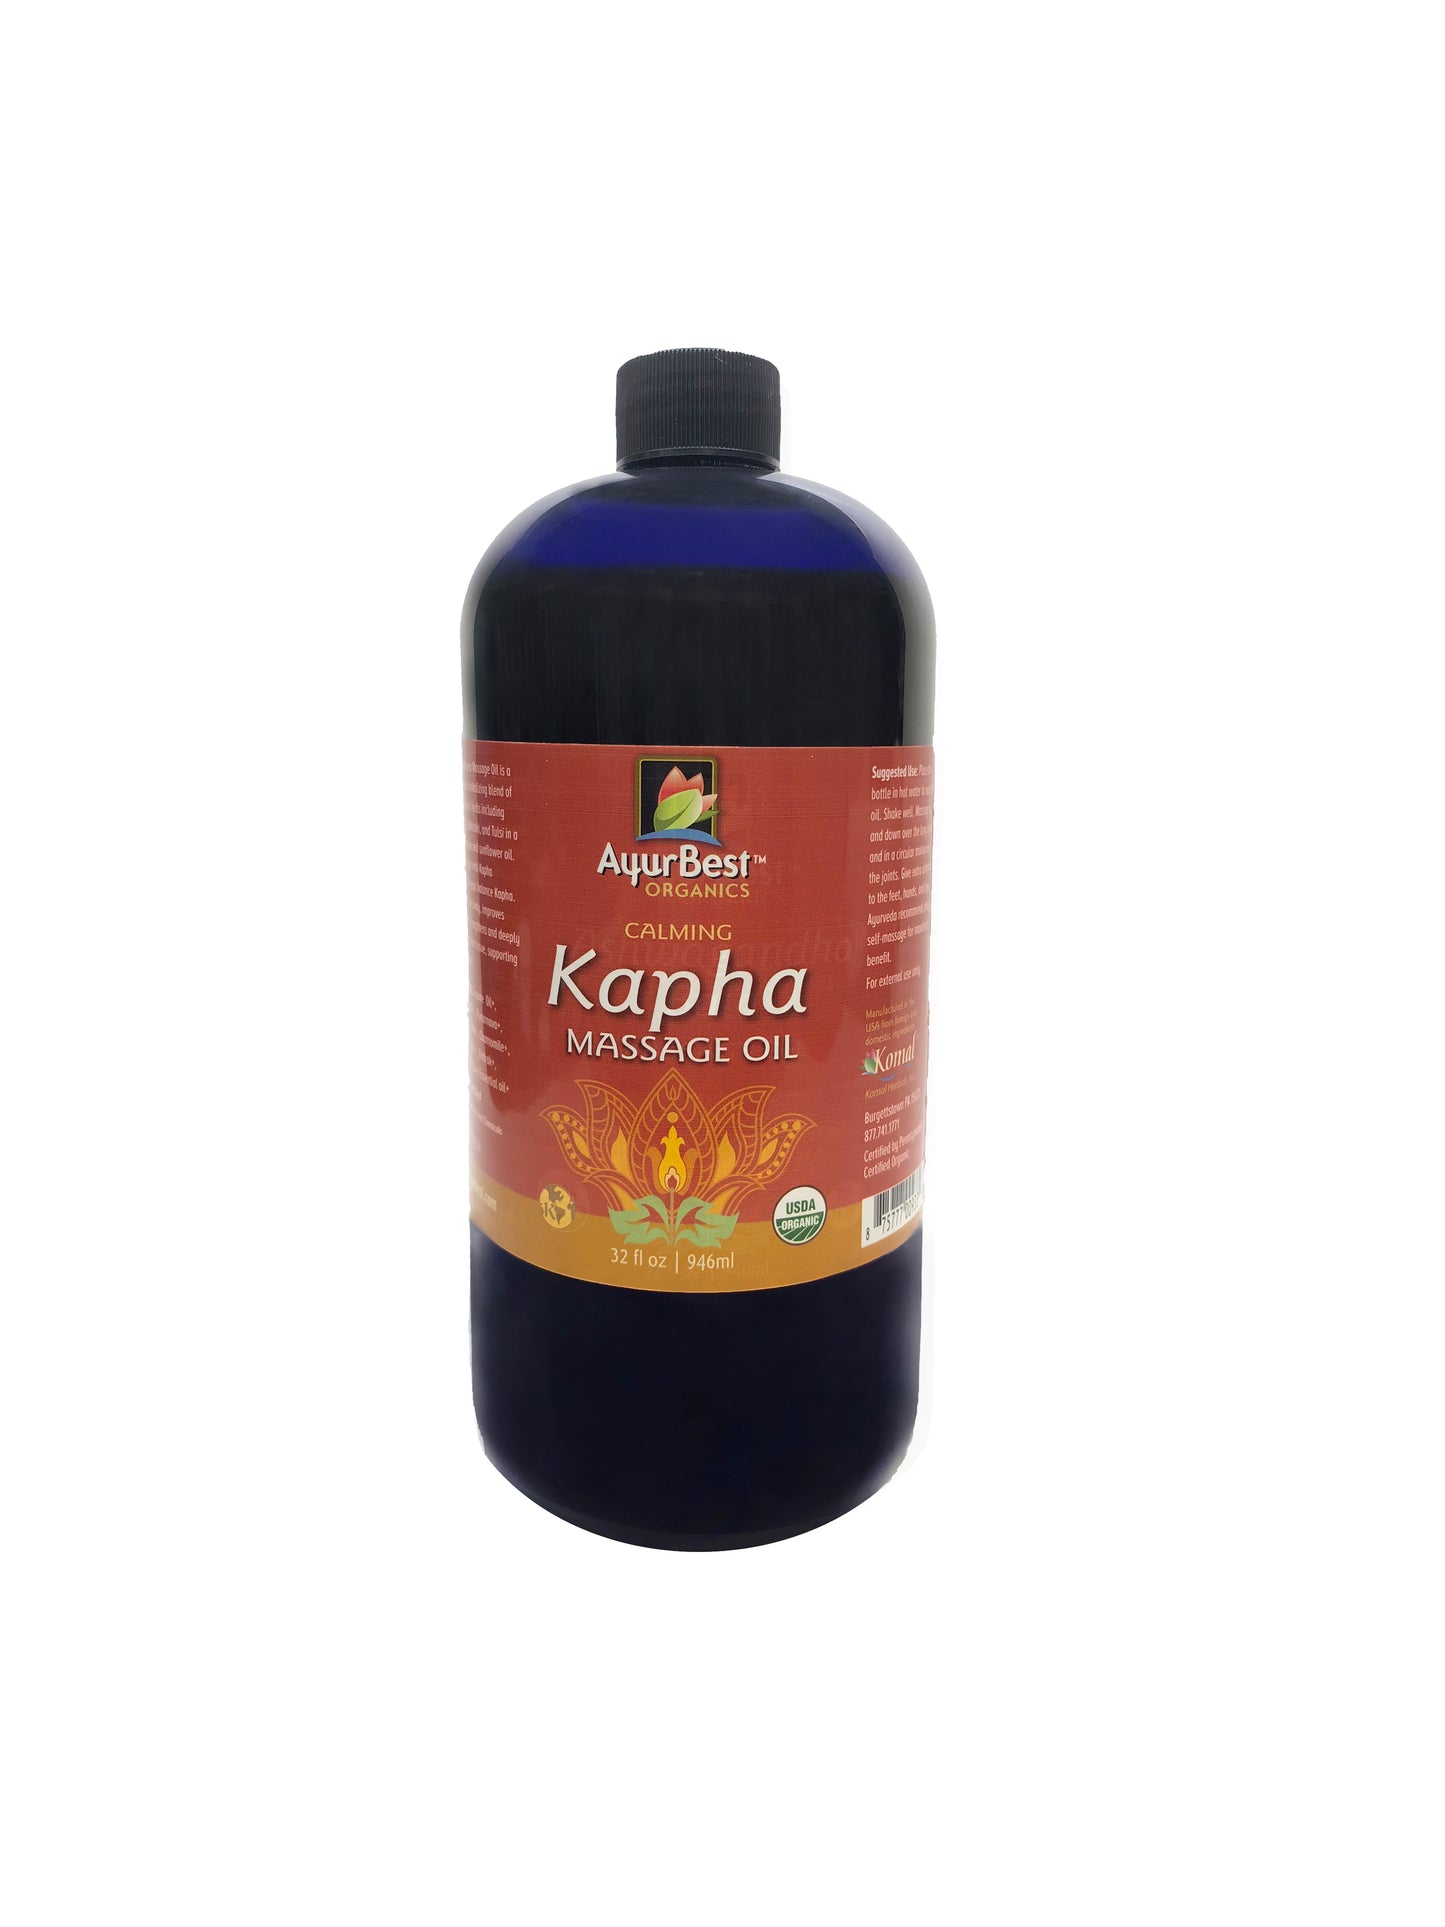 Organic Kapha Massage Oil